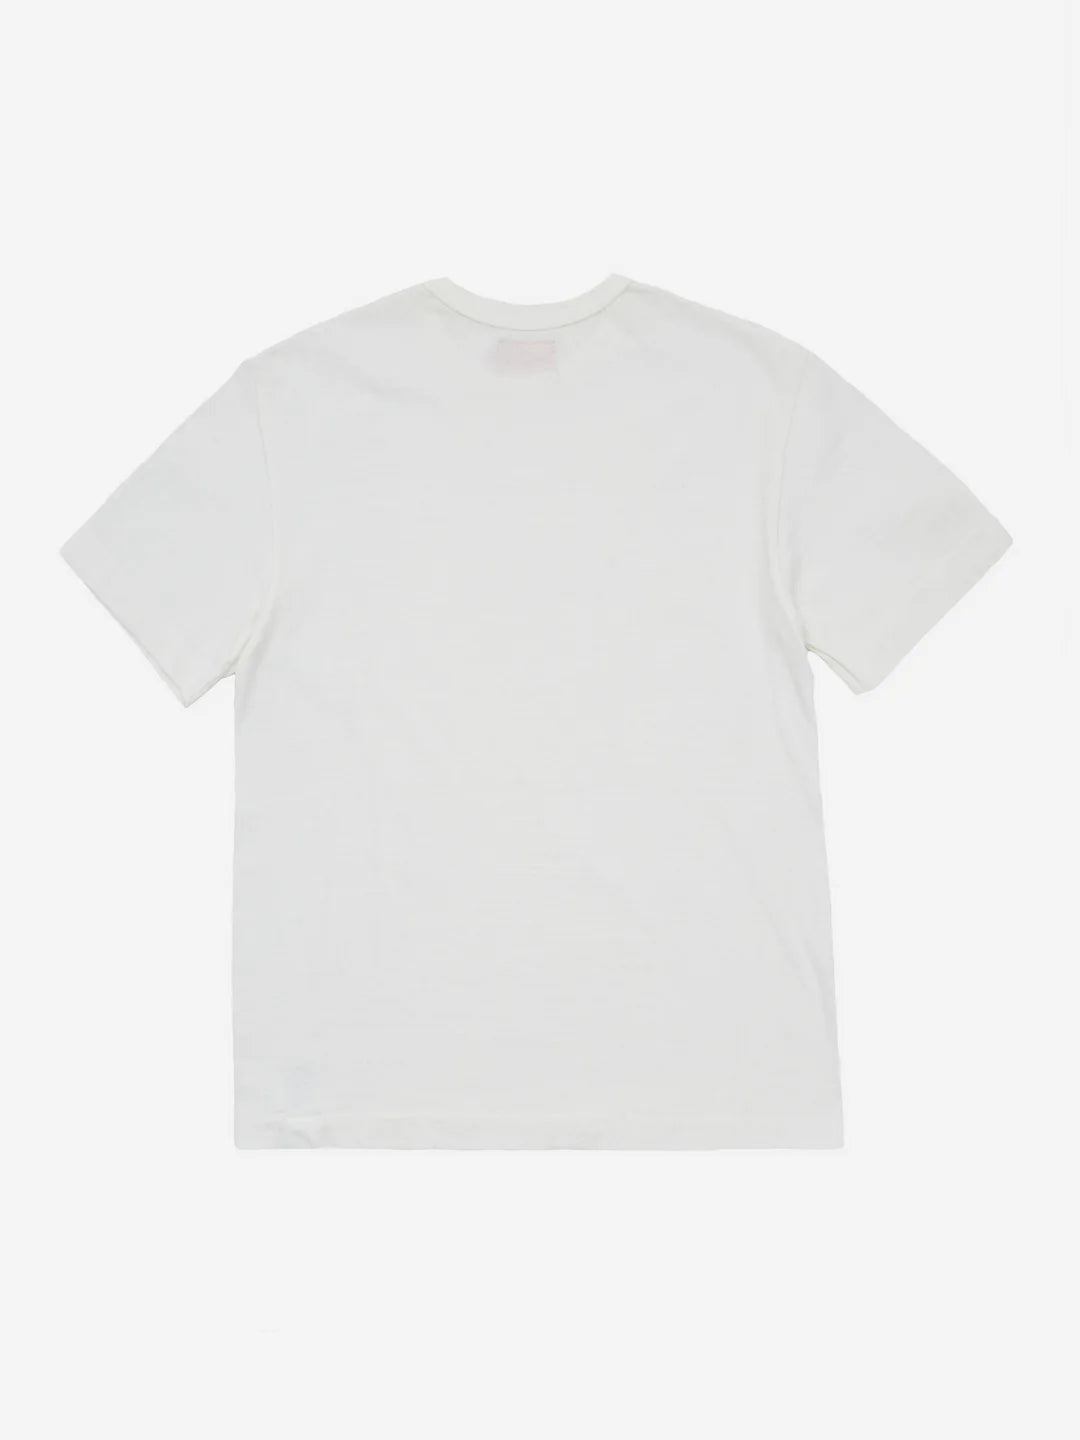 T shirt Na'Maka'Oh Short Sleeve Off White - Sunray